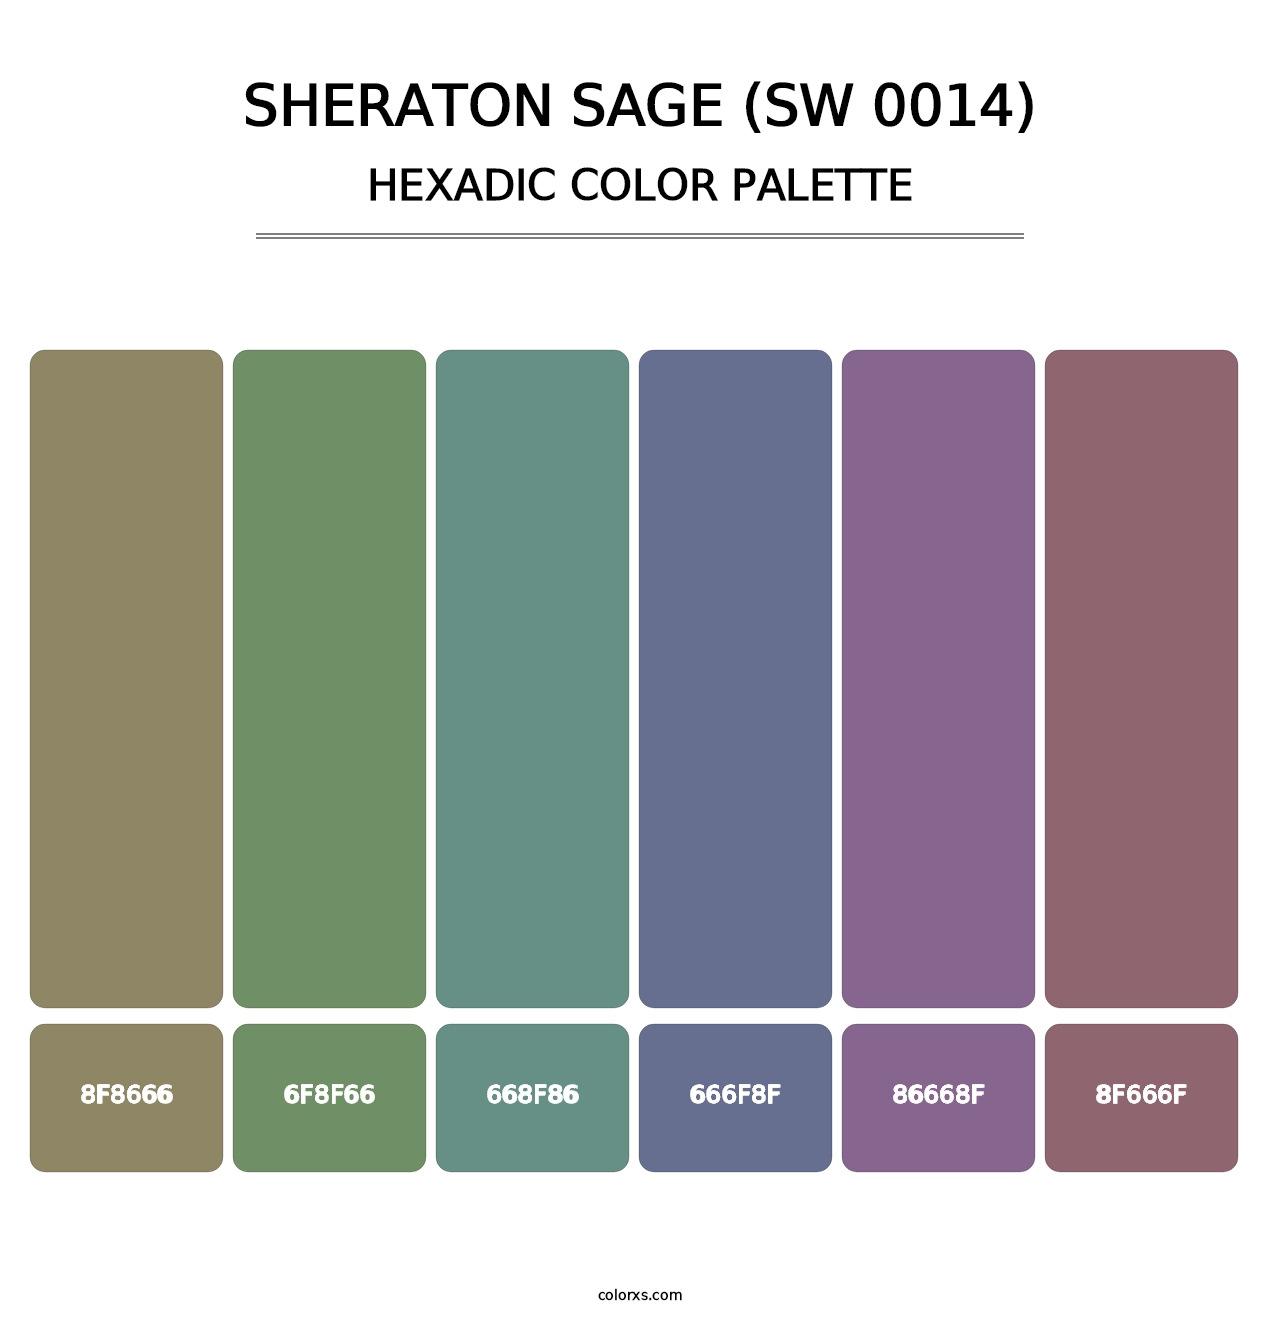 Sheraton Sage (SW 0014) - Hexadic Color Palette